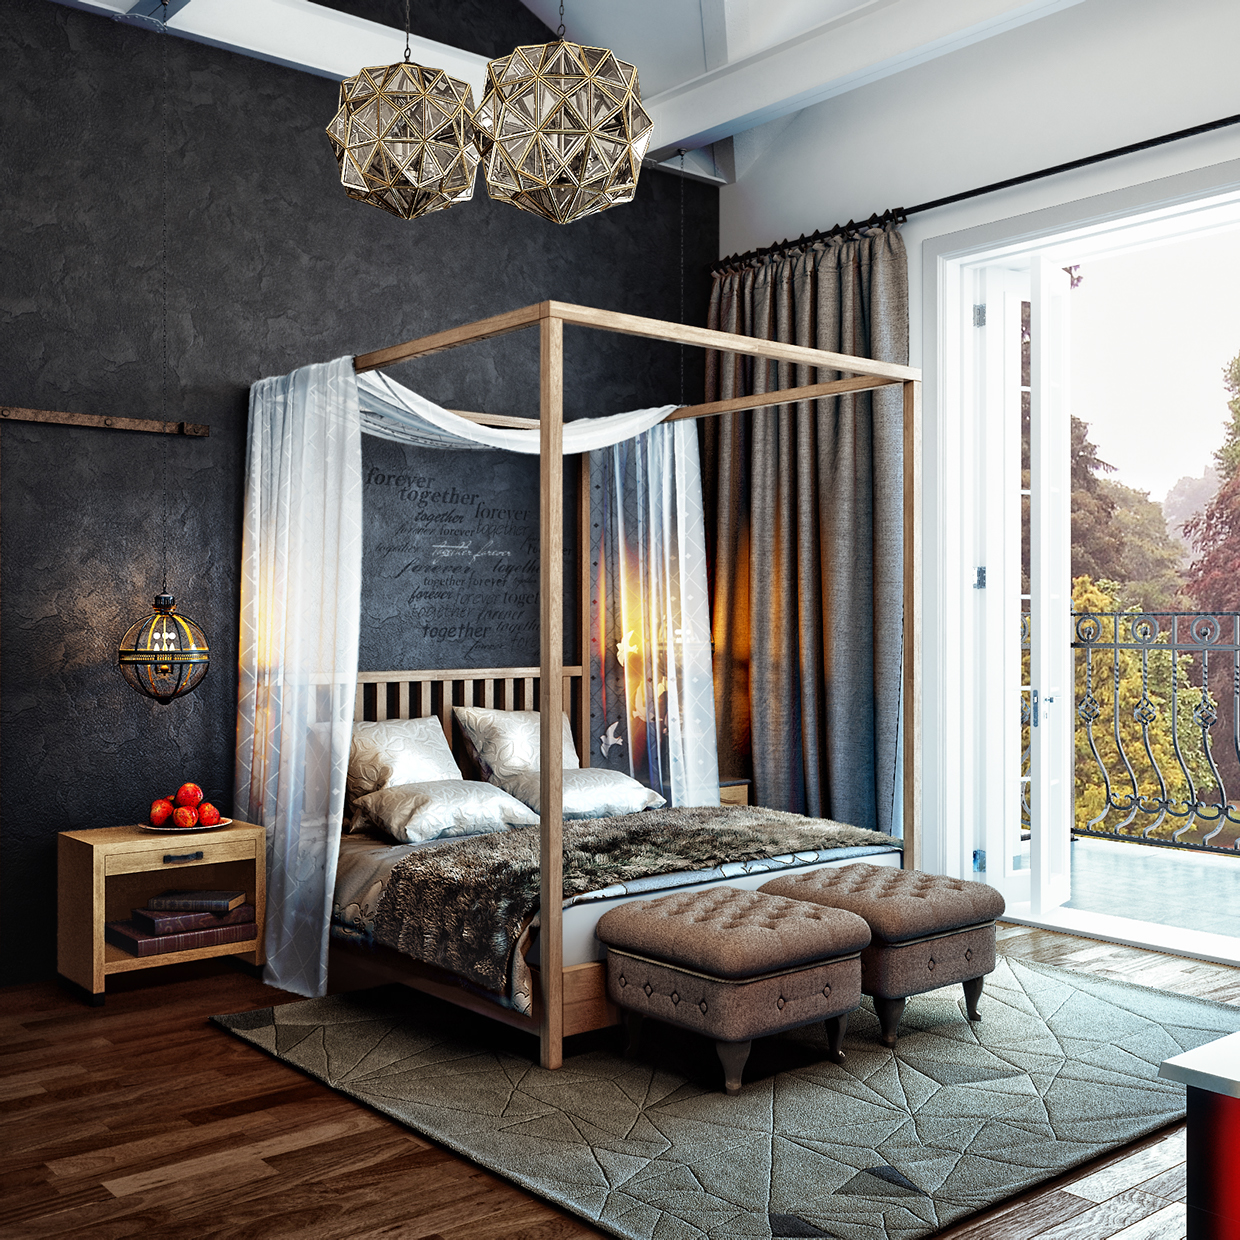 Valance bedroom design "width =" 1240 "height =" 1240 "srcset =" https://mileray.com/wp-content/uploads/2020/05/1588509924_128_An-Awesome-Luxury-Bedroom-Design-by-Olga-Podgornaja.jpg 1240w, https://mileray.com/ wp-content / uploads / 2016/08 / Olga-Podgornaja3-150x150.jpg 150w, https://mileray.com/wp-content/uploads/2016/08/Olga-Podgornaja3-300x300.jpg 300w, https: // mileray.com/wp-content/uploads/2016/08/Olga-Podgornaja3-768x768.jpg 768w, https://mileray.com/wp-content/uploads/2016/08/Olga-Podgornaja3-1024x1024.jpg 1024w, https://mileray.com/wp-content/uploads/2016/08/Olga-Podgornaja3-696x696.jpg 696w, https://mileray.com/wp-content/uploads/2016/08/Olga-Podgornaja3-1068x1068 .jpg 1068w, https://mileray.com/wp-content/uploads/2016/08/Olga-Podgornaja3-420x420.jpg 420w "sizes =" (maximum width: 1240px) 100vw, 1240px